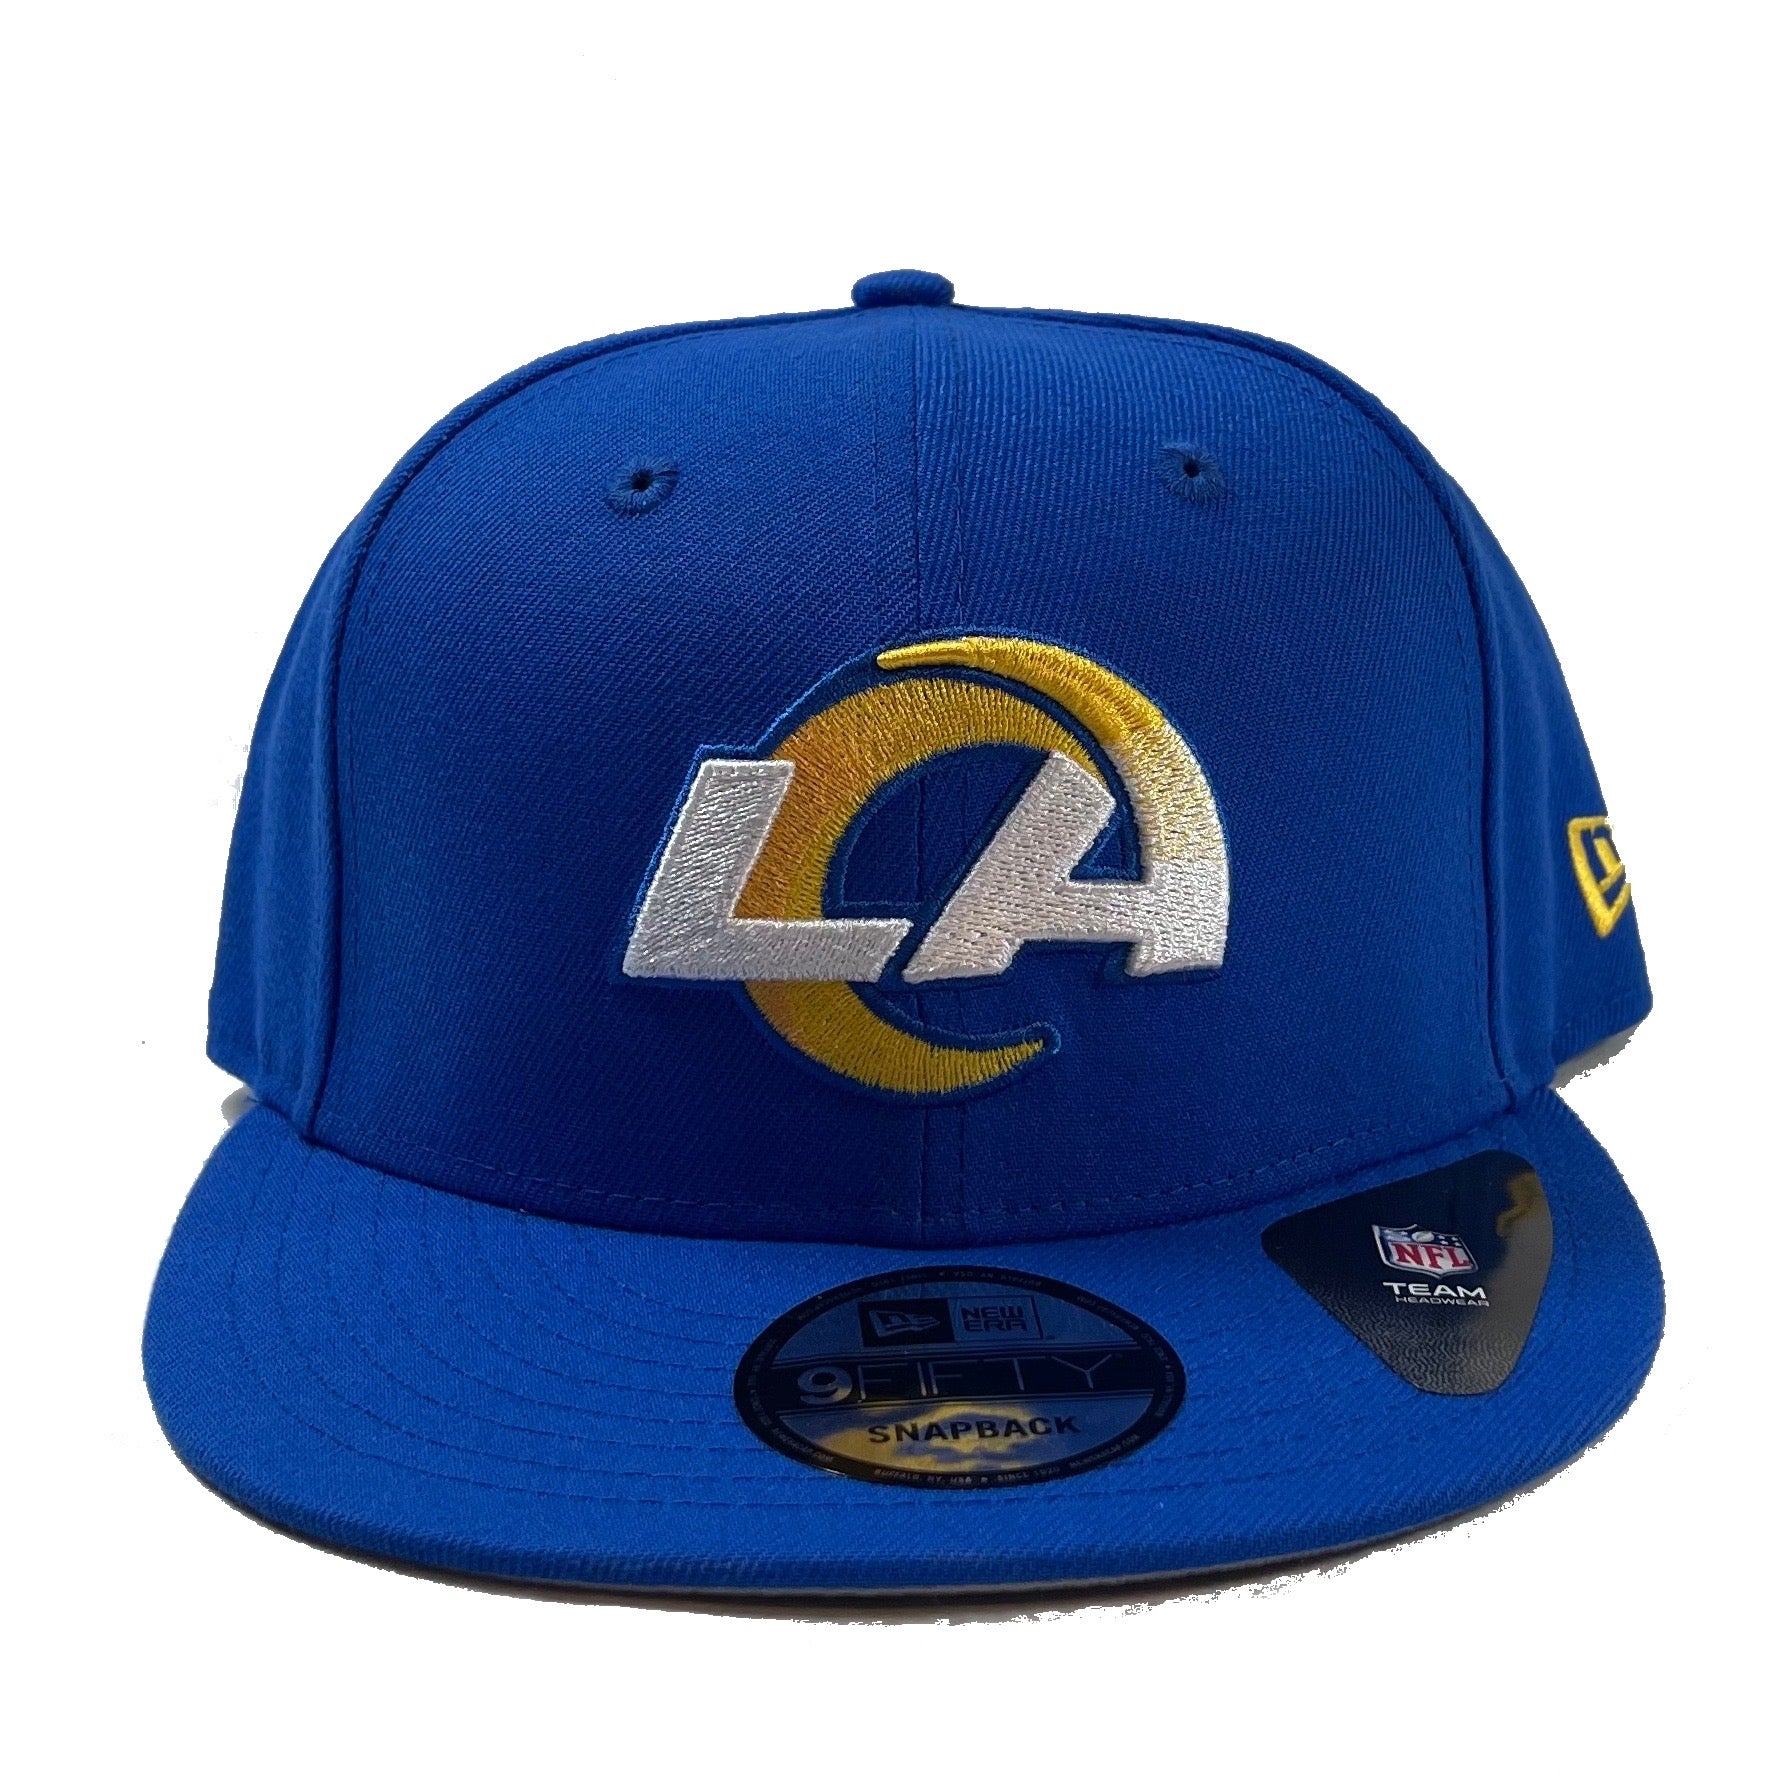 Los Angeles Rams Hats, Rams Snapback, Rams Caps